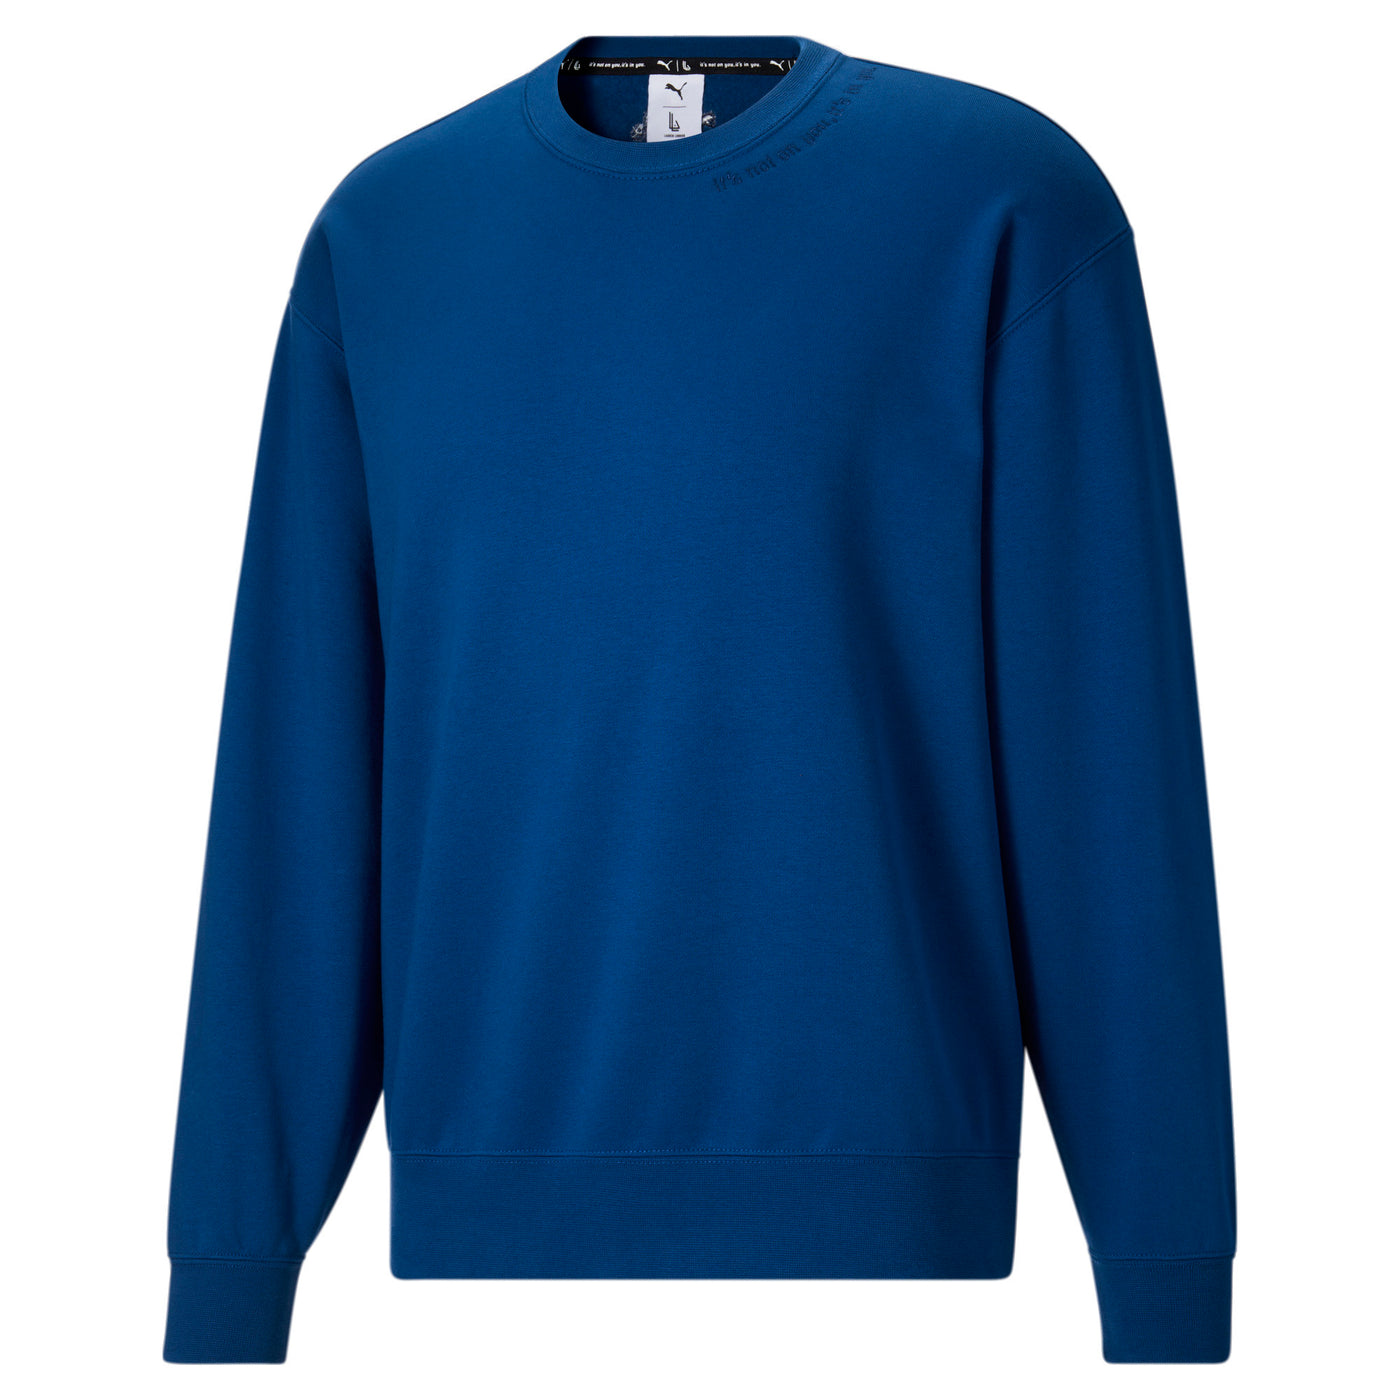 PUMA x Lauren London Crewneck Sweatshirt - Blue - Front